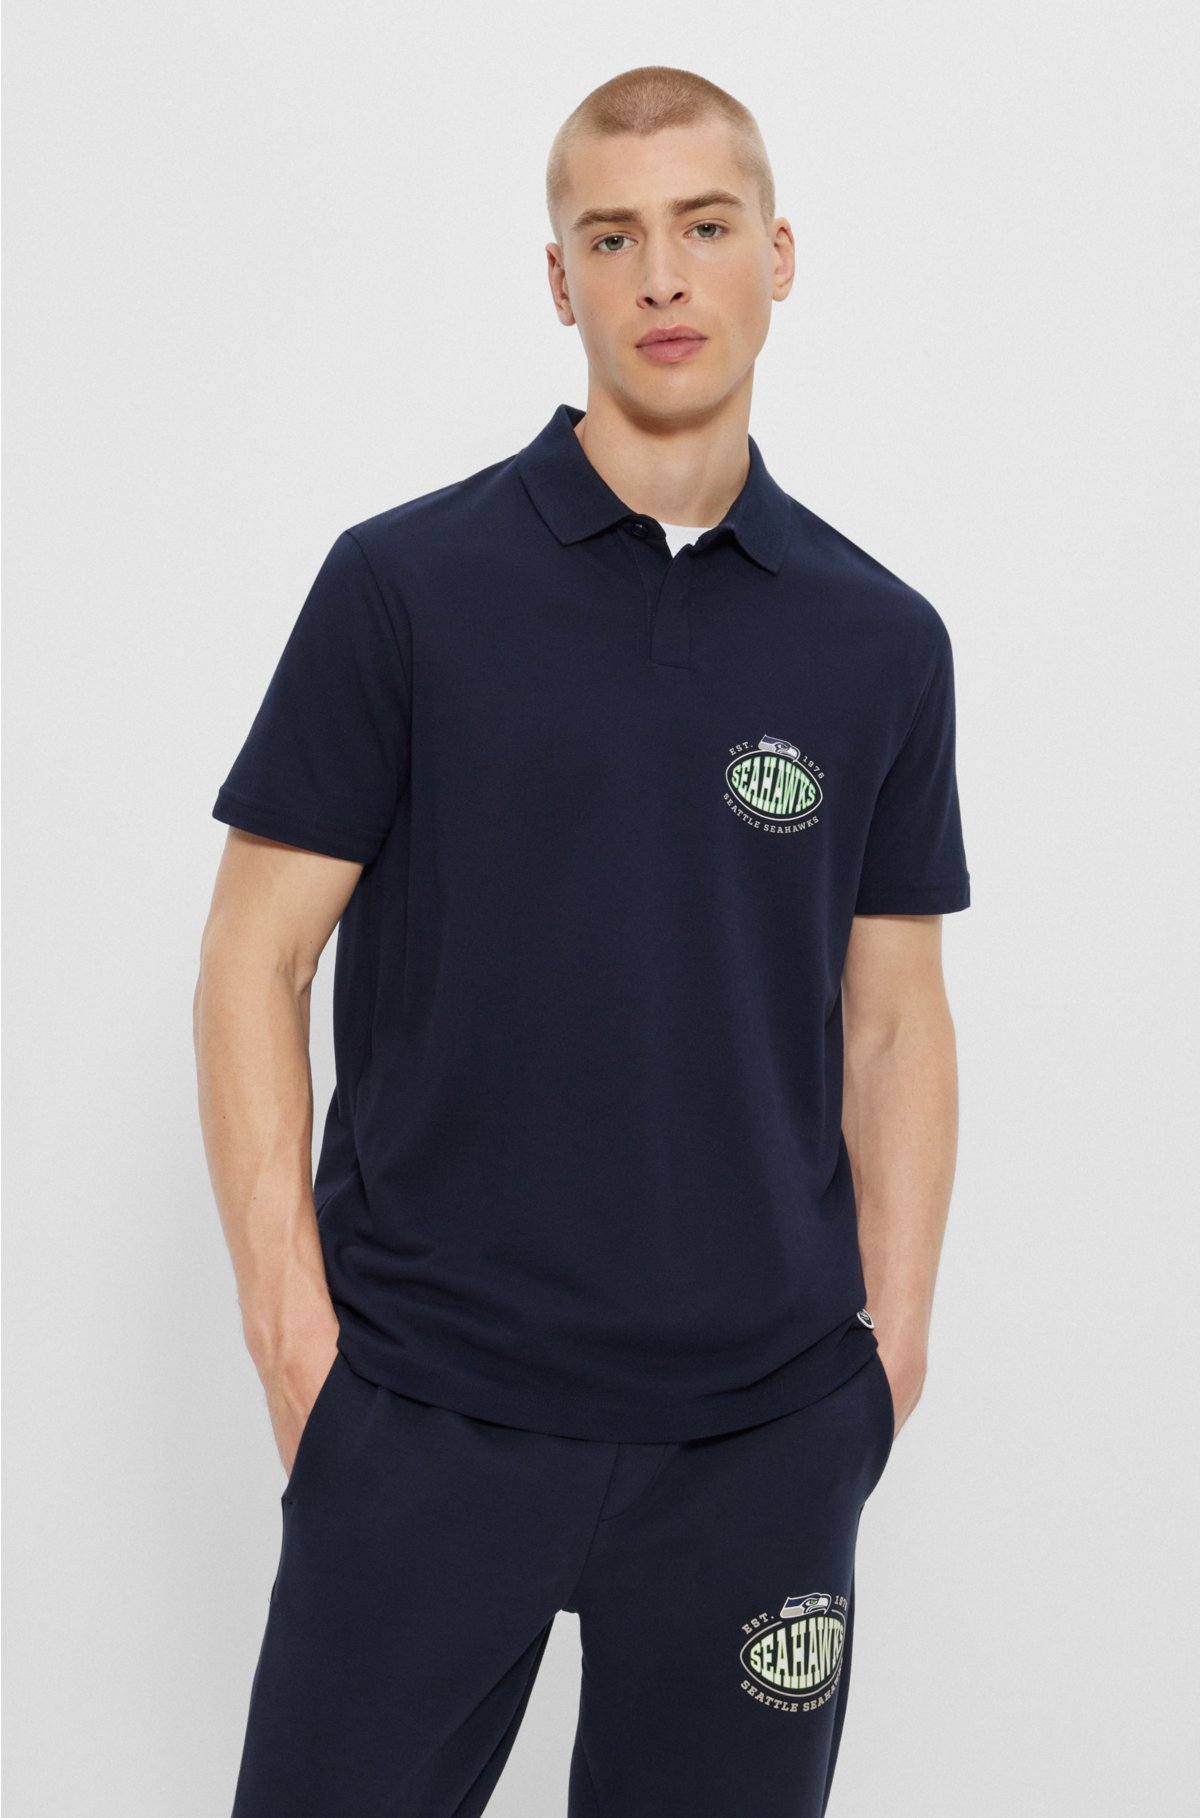 BOSS x NFL cotton-piqué polo shirt with collaborative branding, Seahawks